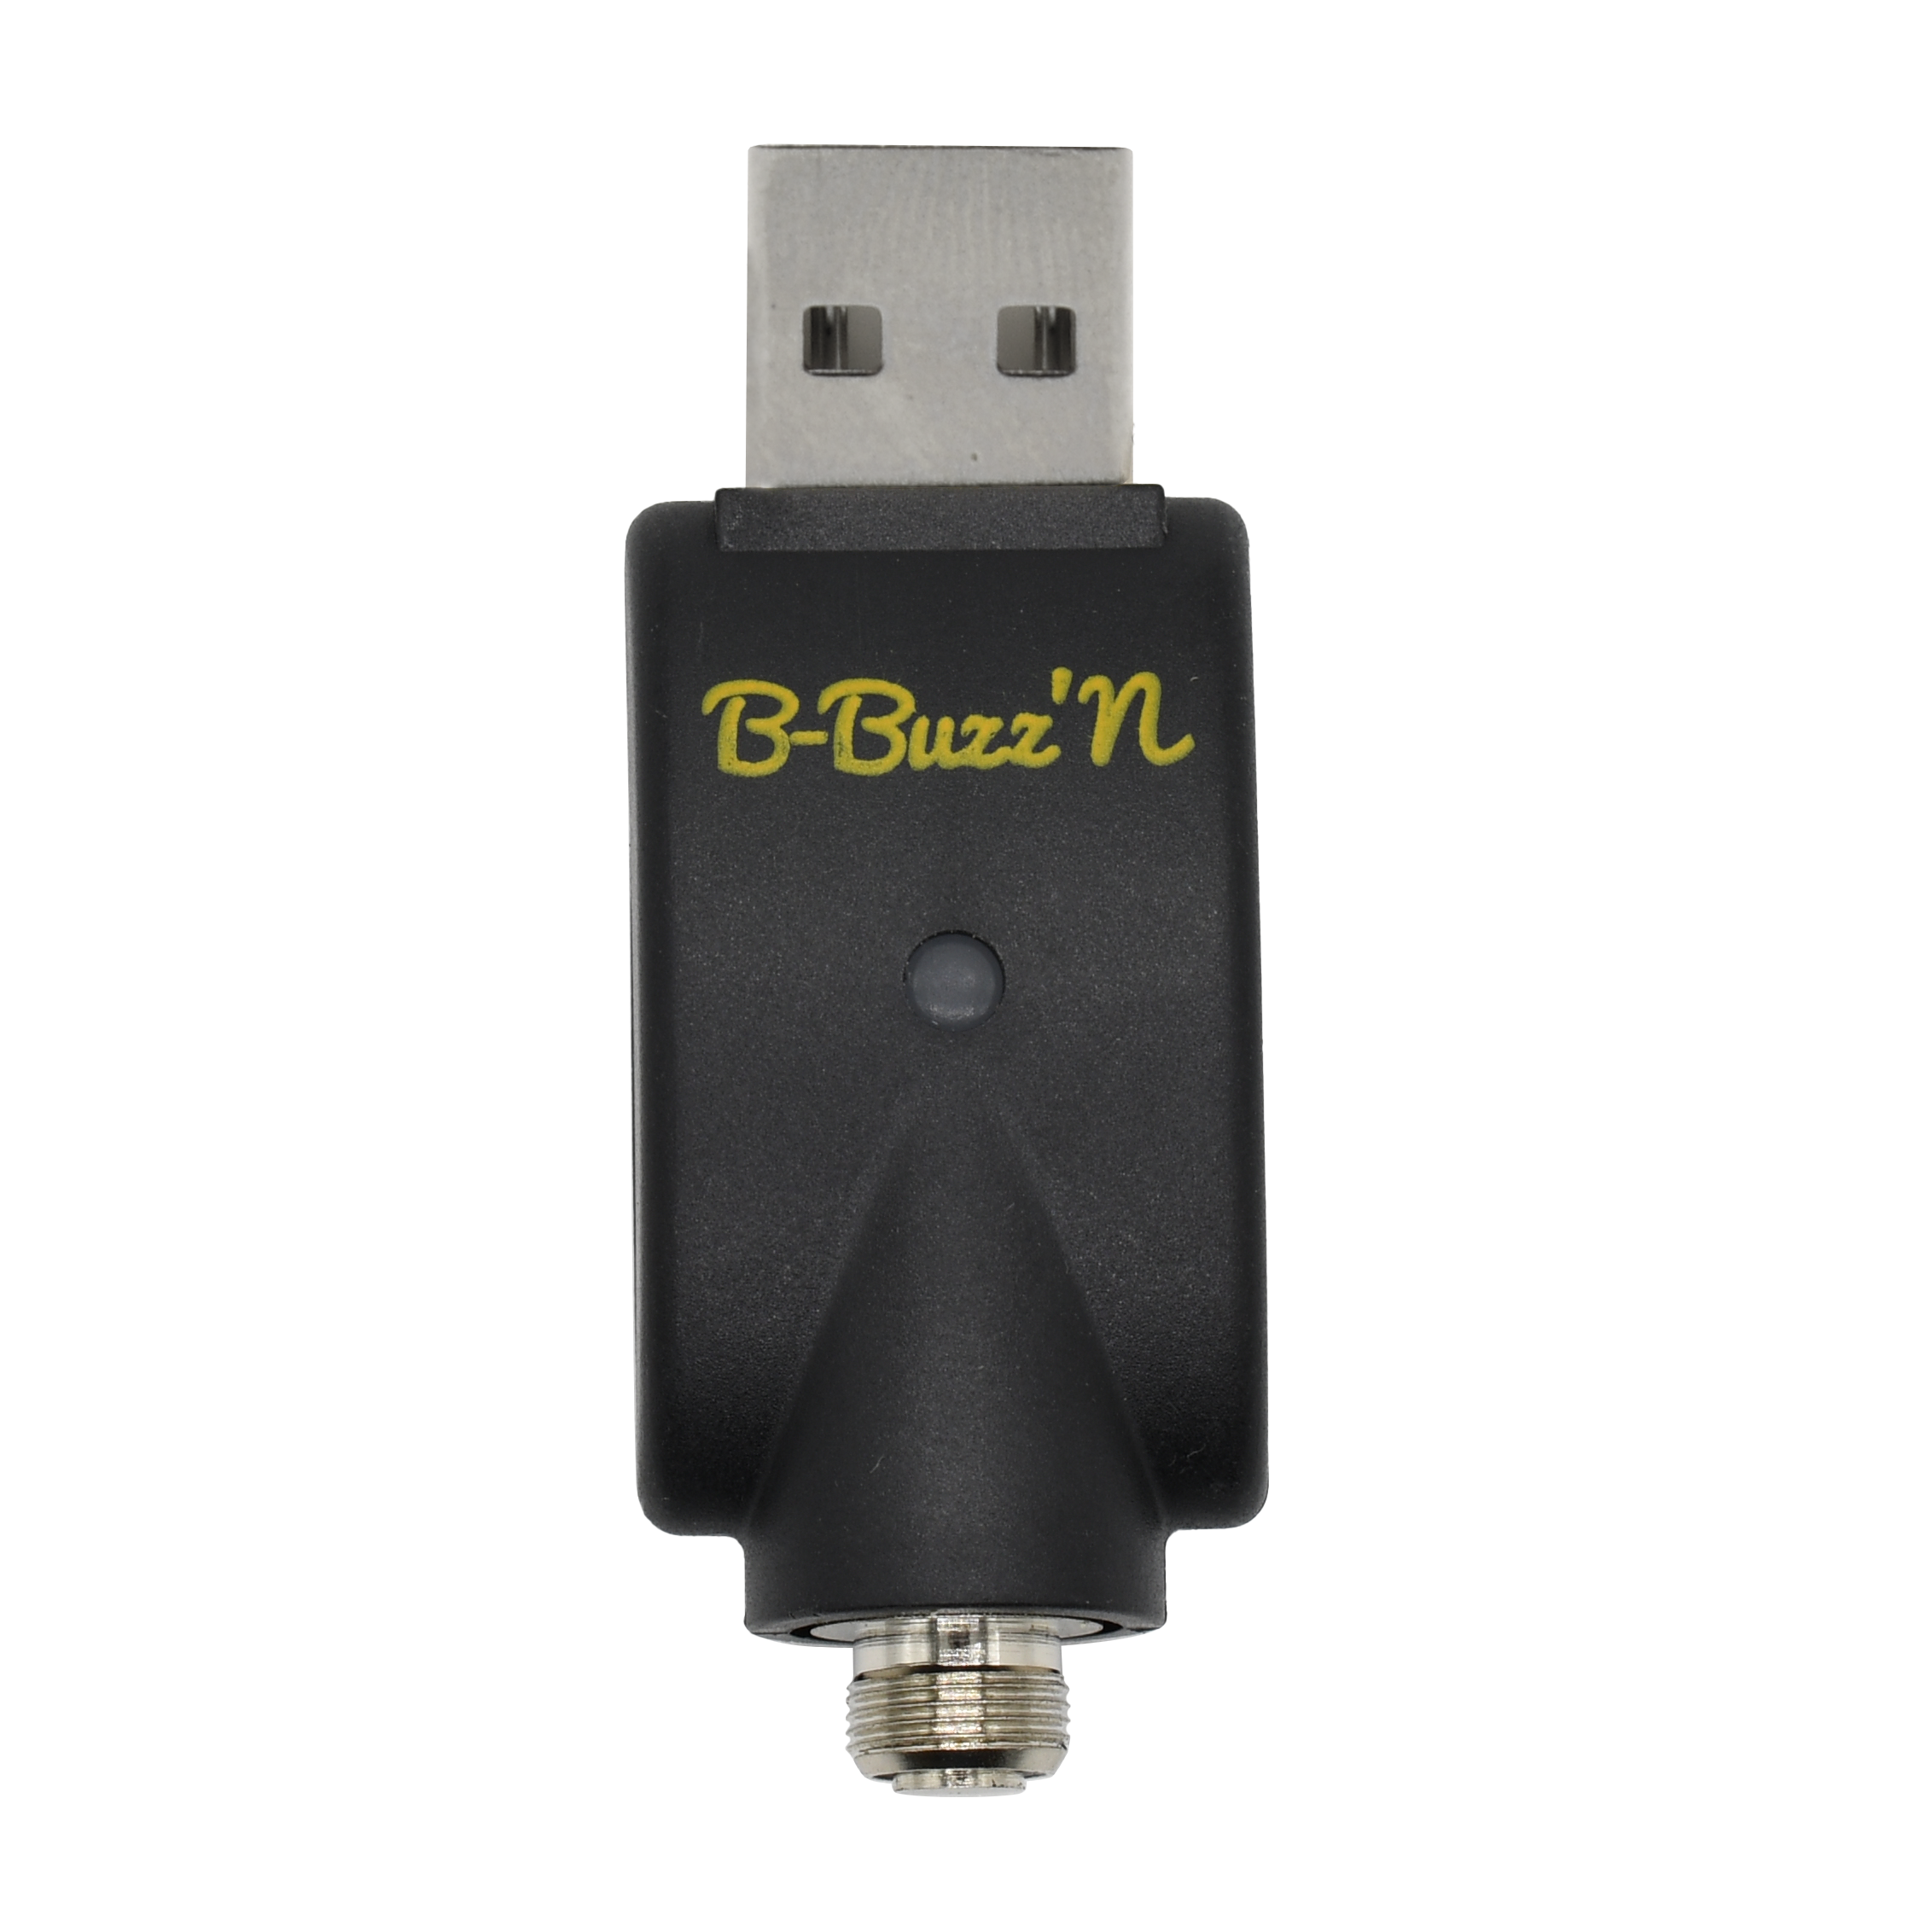 B-Buzz'N HoneyStick USB Chargers 30 Pack